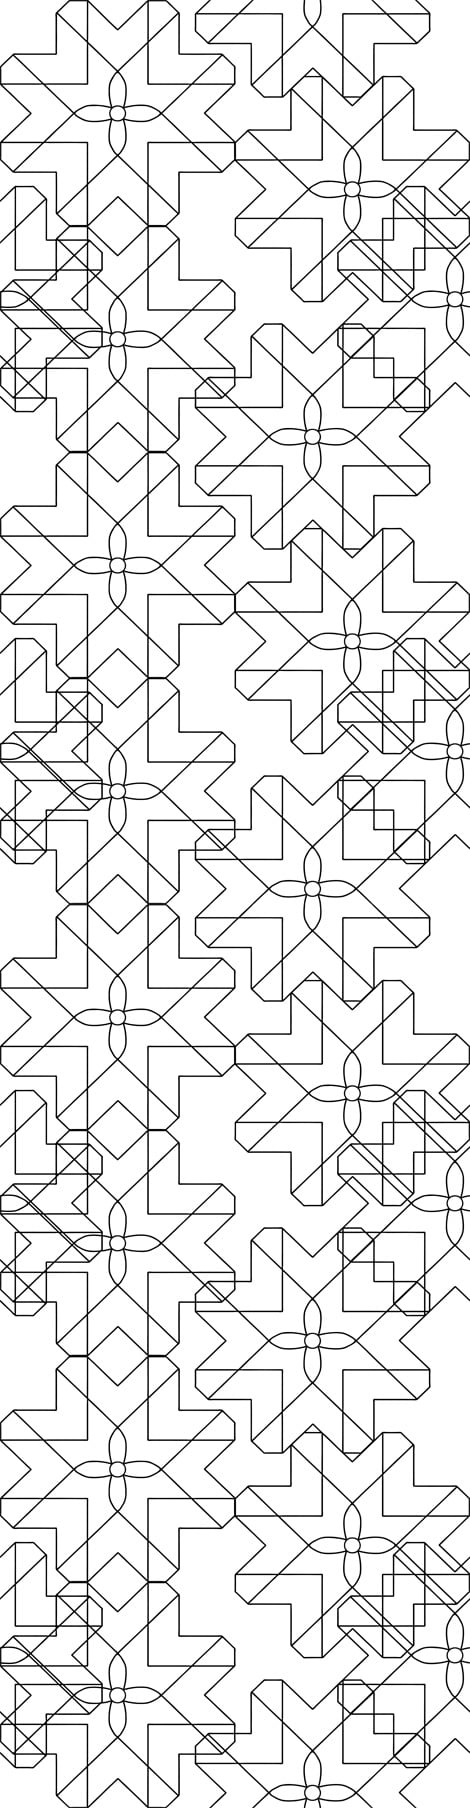 Geometric Wallpaper BW The simple mosaic tile pattern falling at